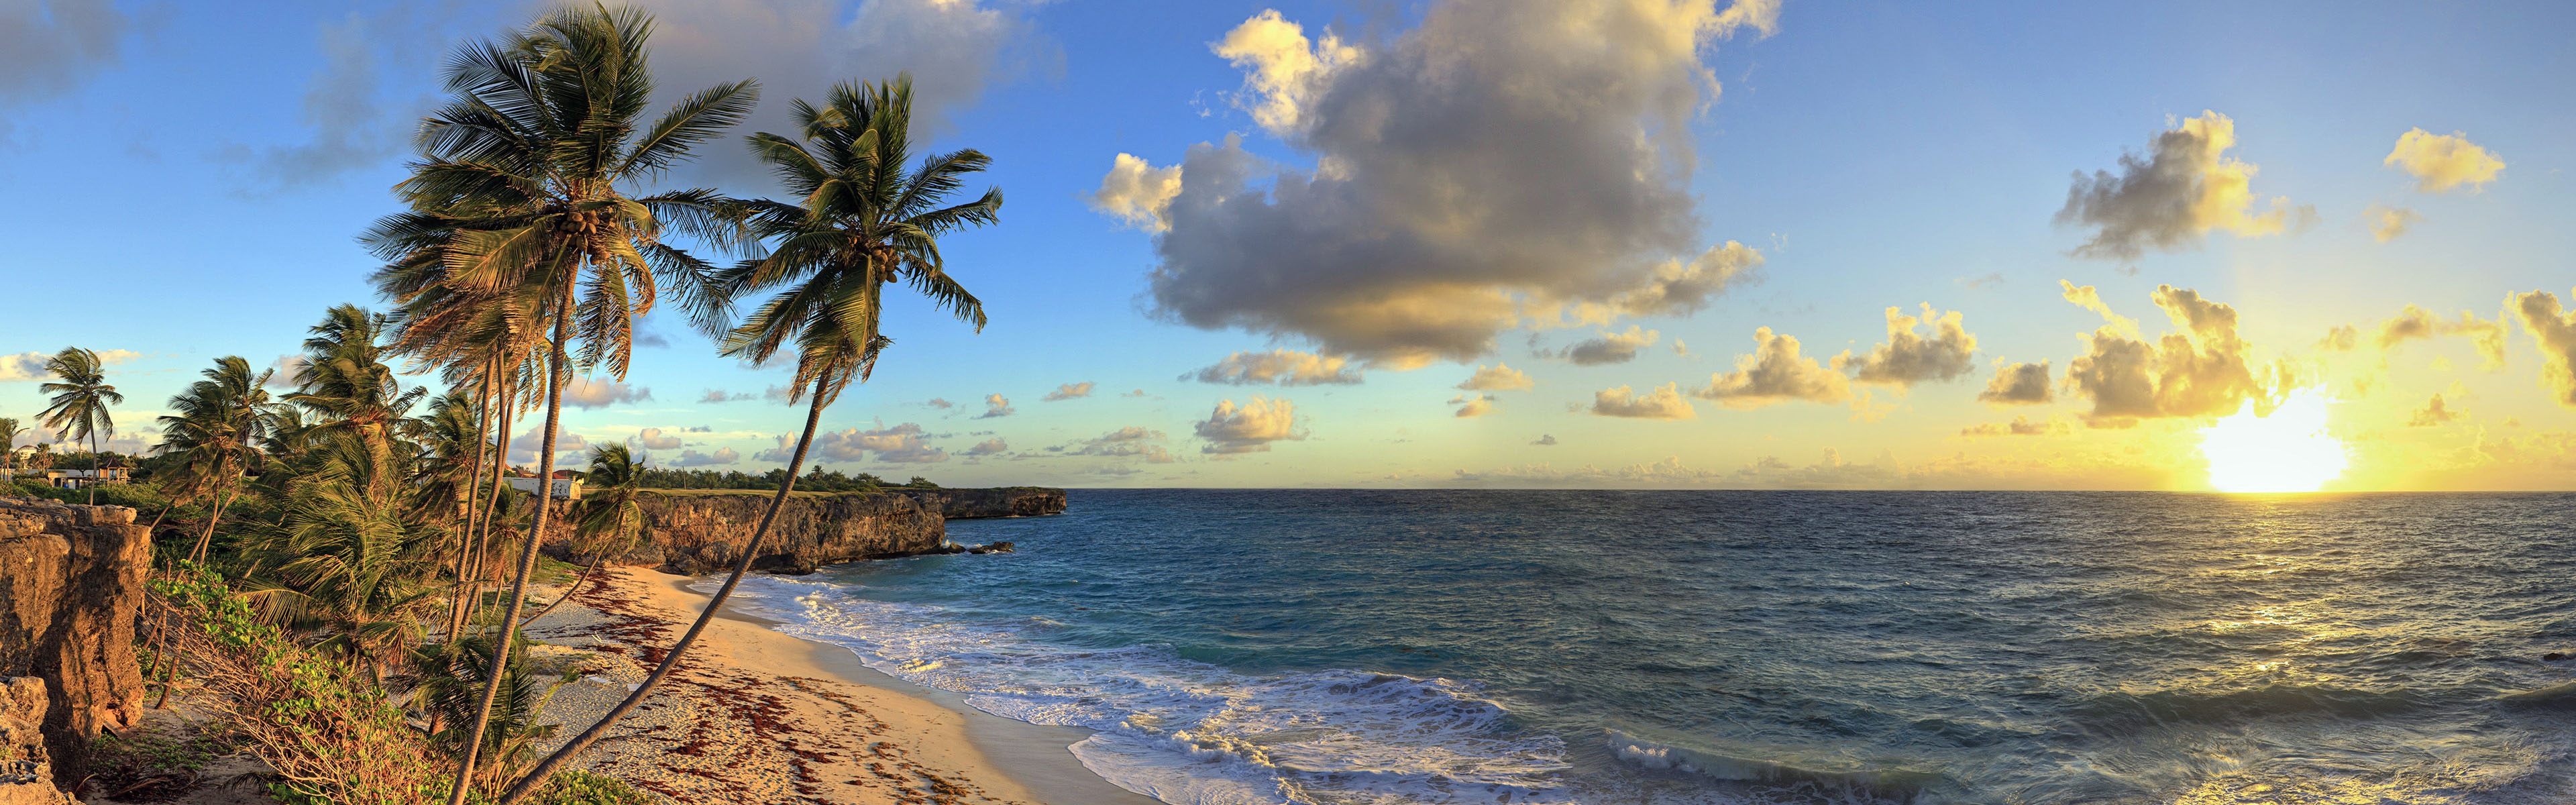 Beautiful beach sunset, Windows 8 panoramic widescreen wallpapers #6 - 3840x1200